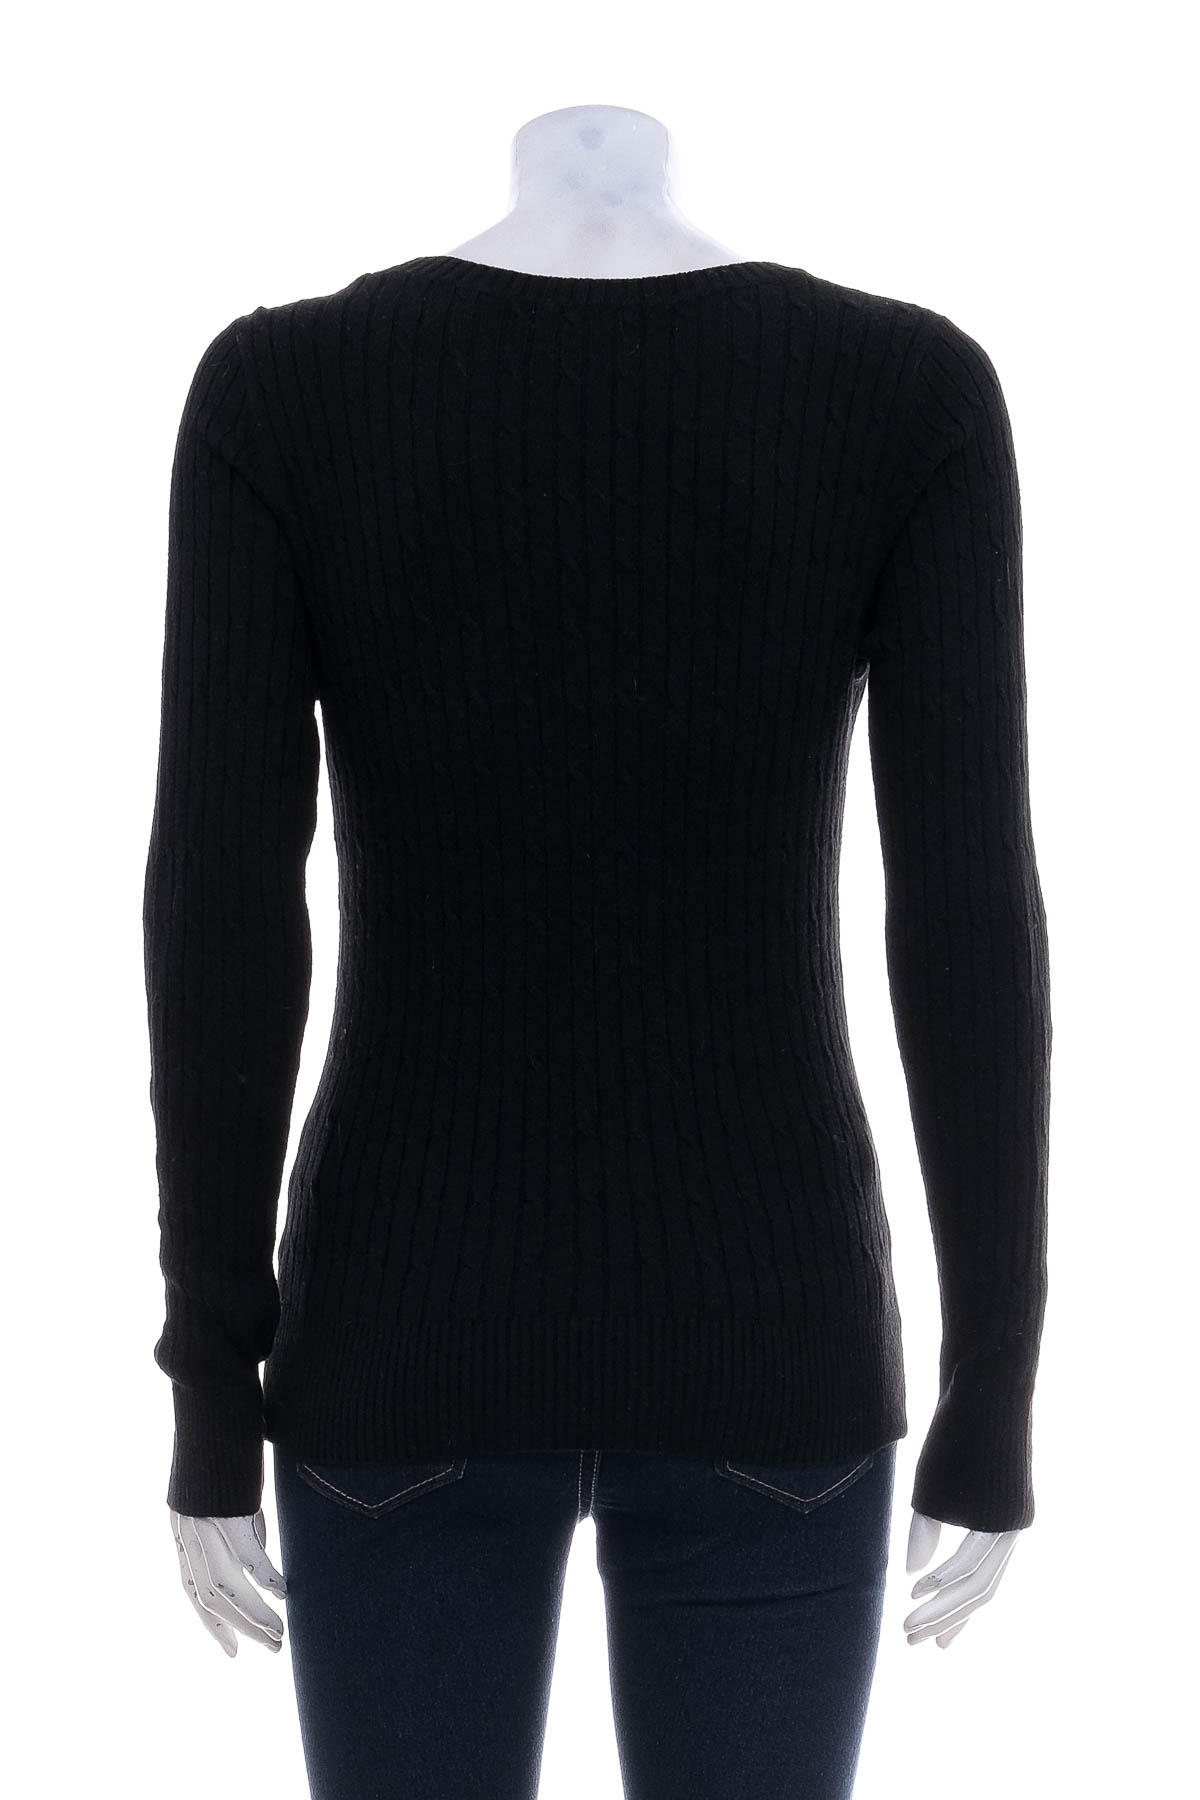 Women's sweater - MERONA - 1